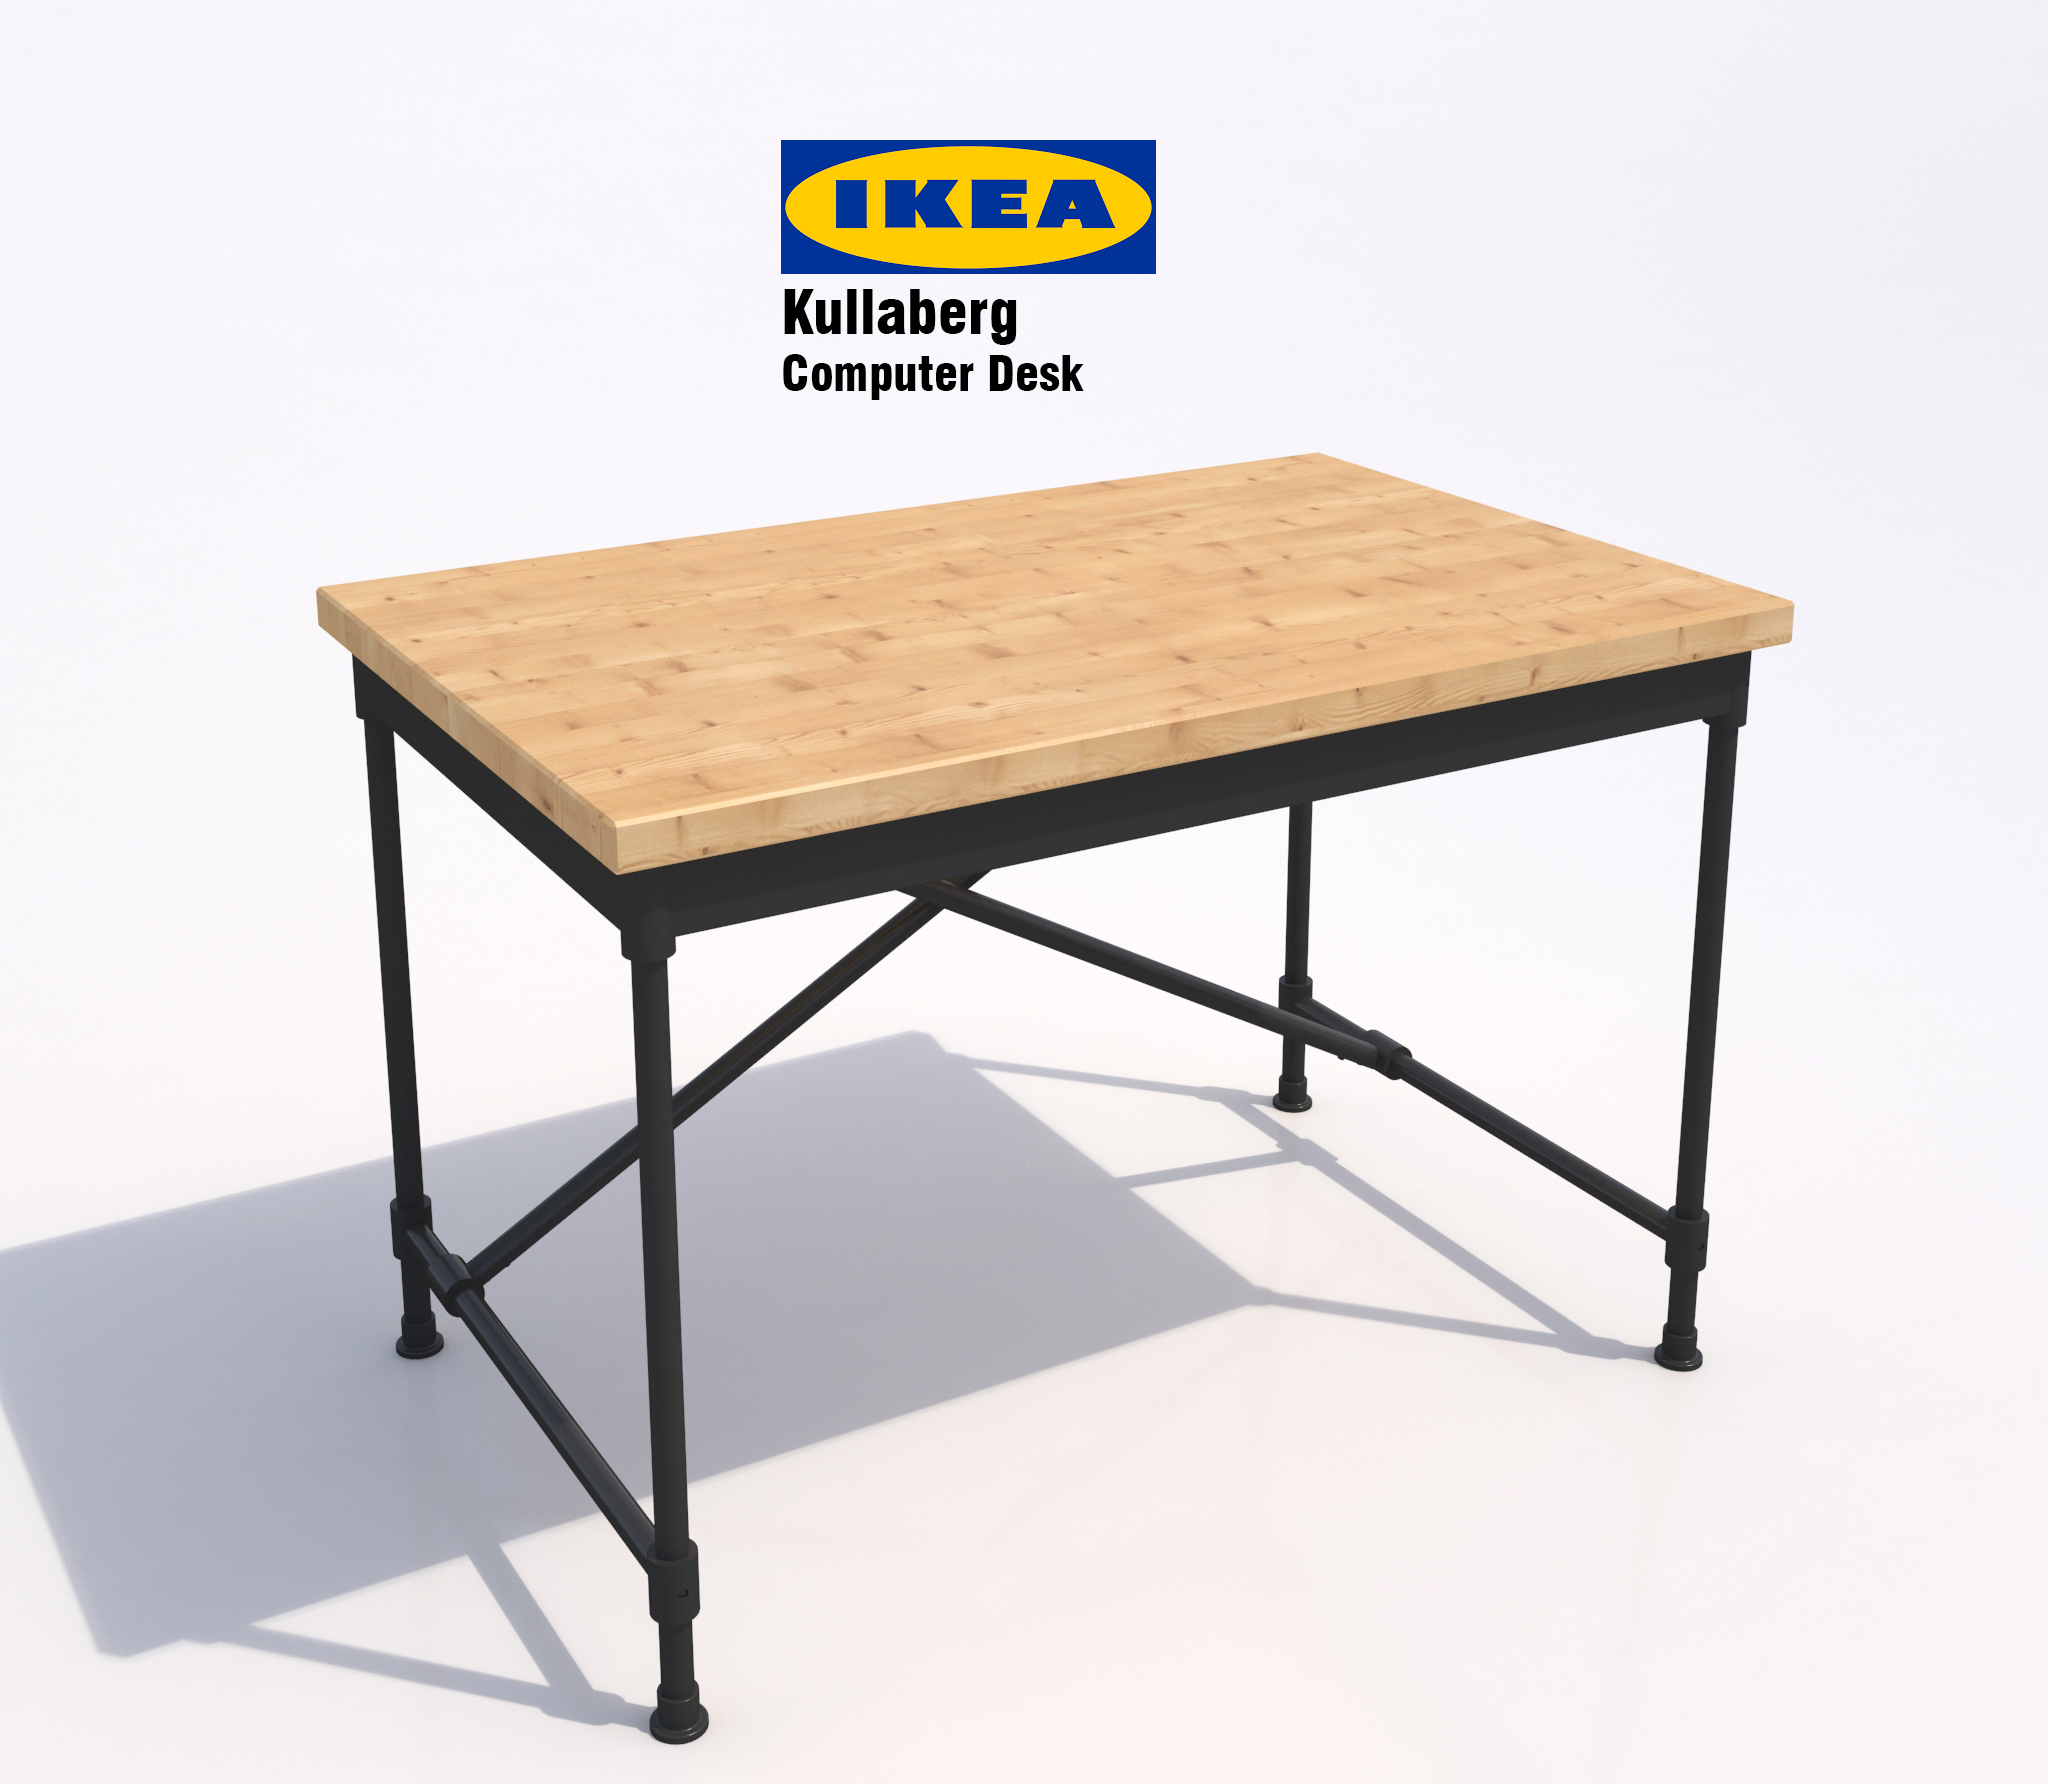 3d Ikea Kullaberg Computer Desk Model